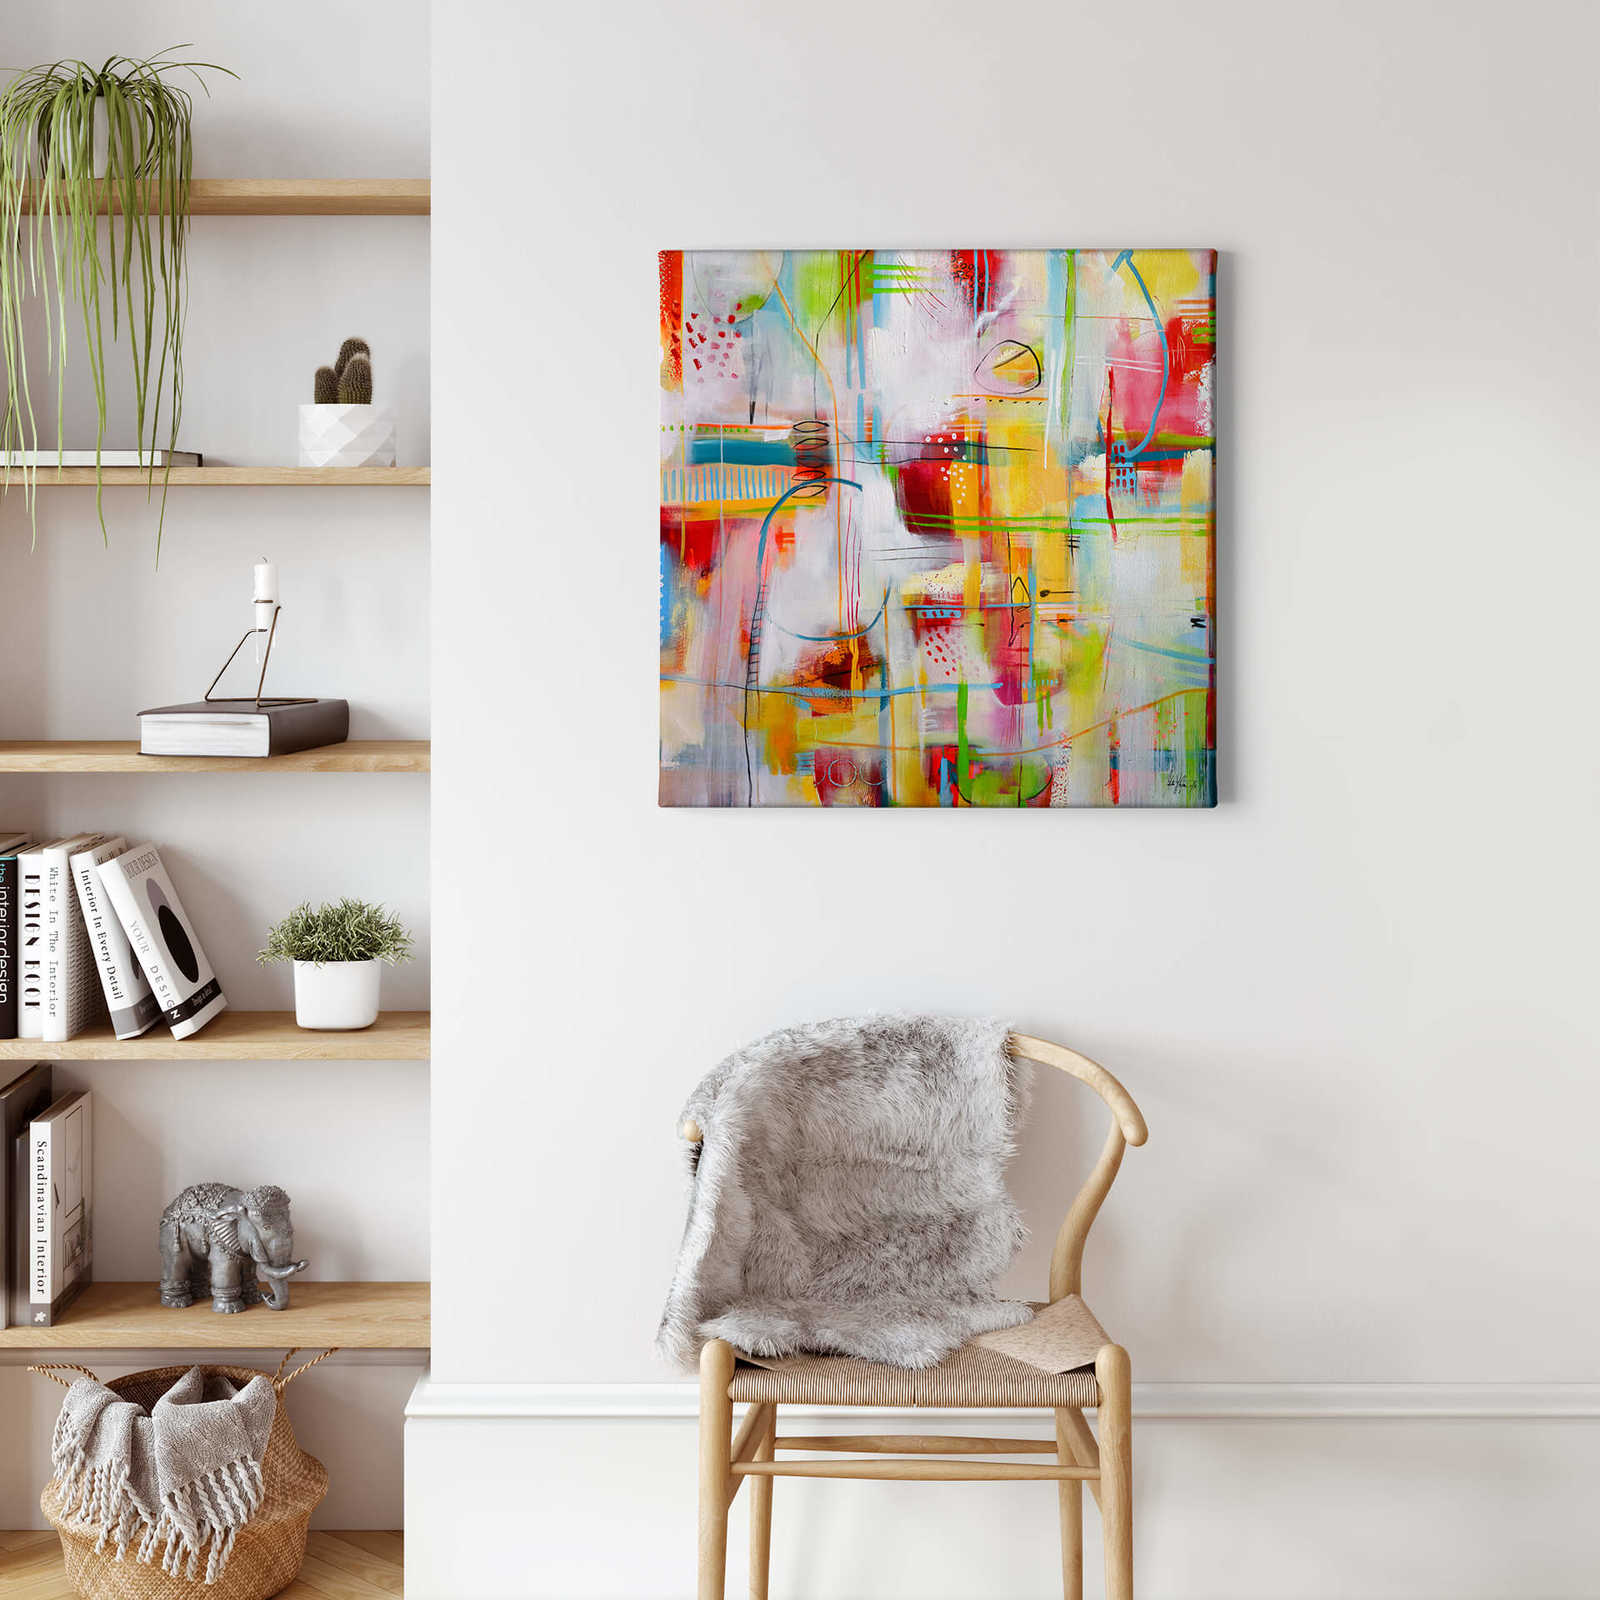             Fedrau Canvas schilderij abstracte kunst - 0,50 m x 0,50 m
        